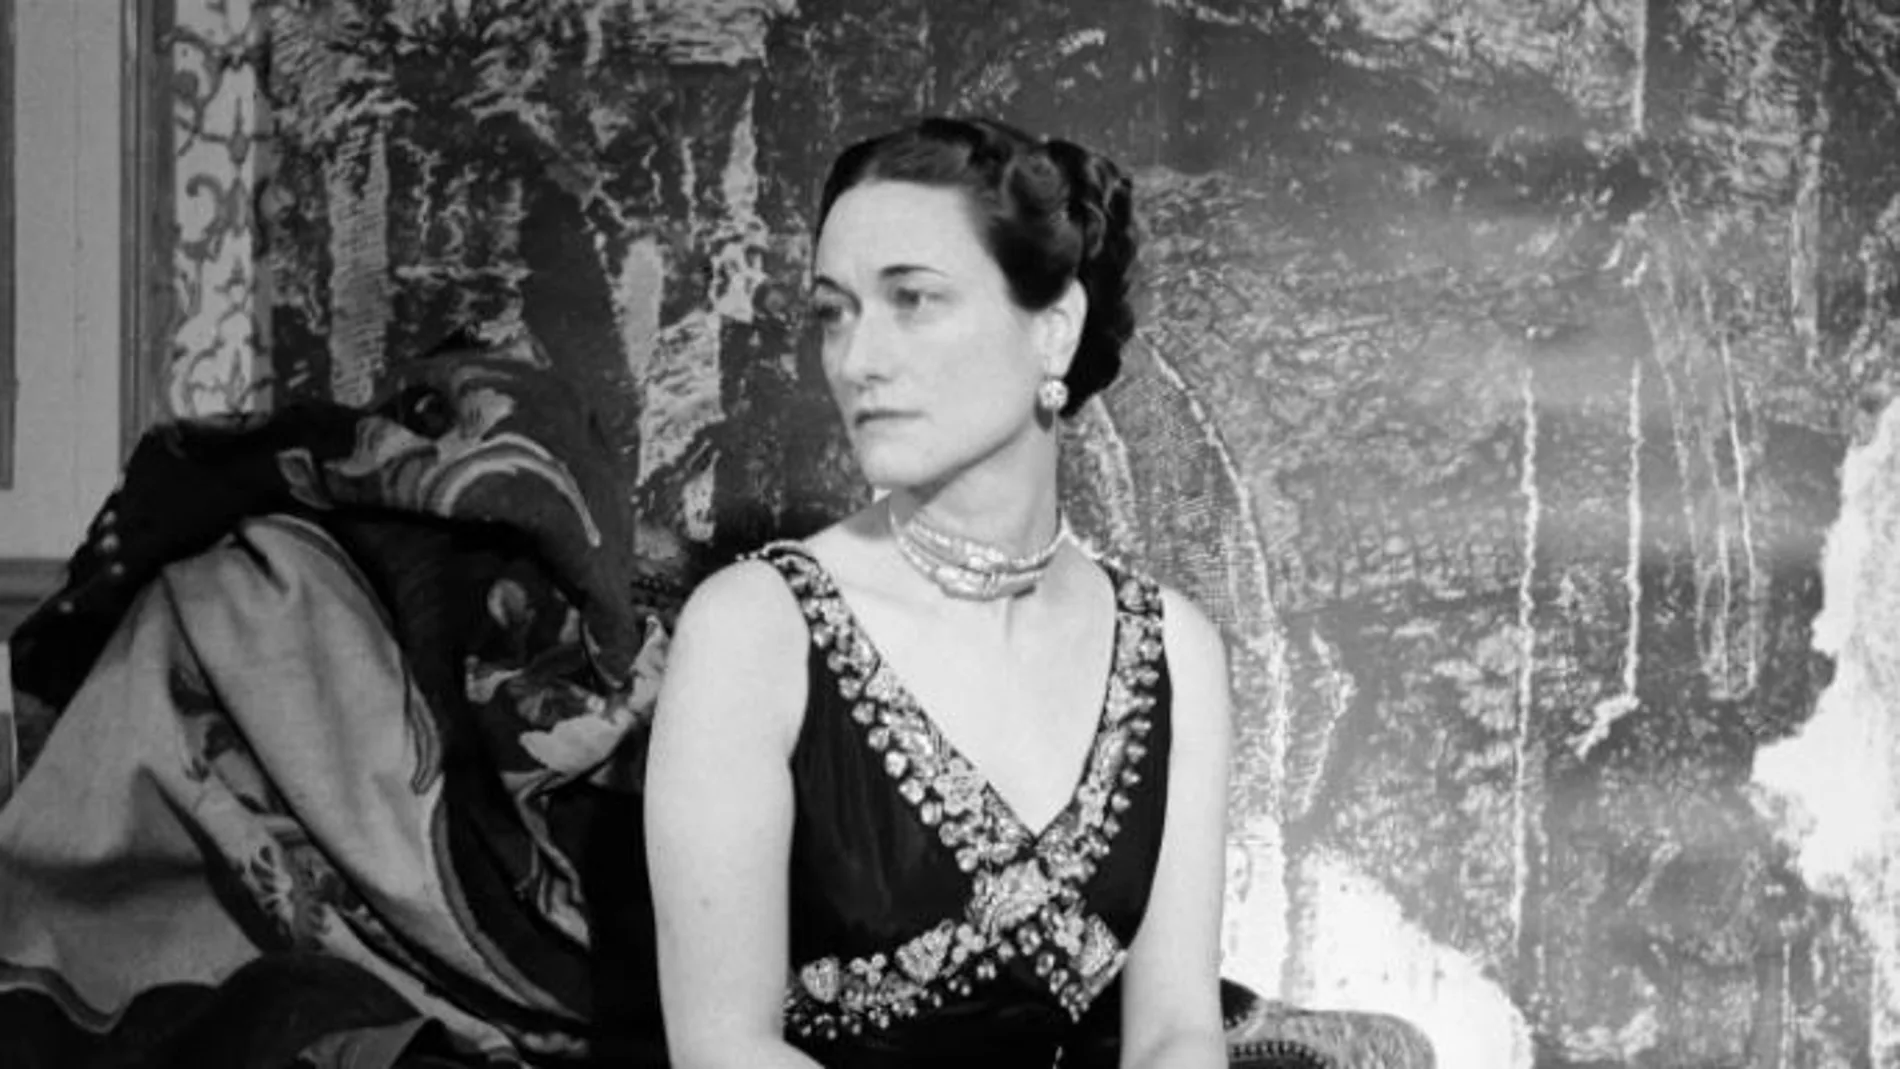 La duquesa de Windsor, con el brazalete de rubíes